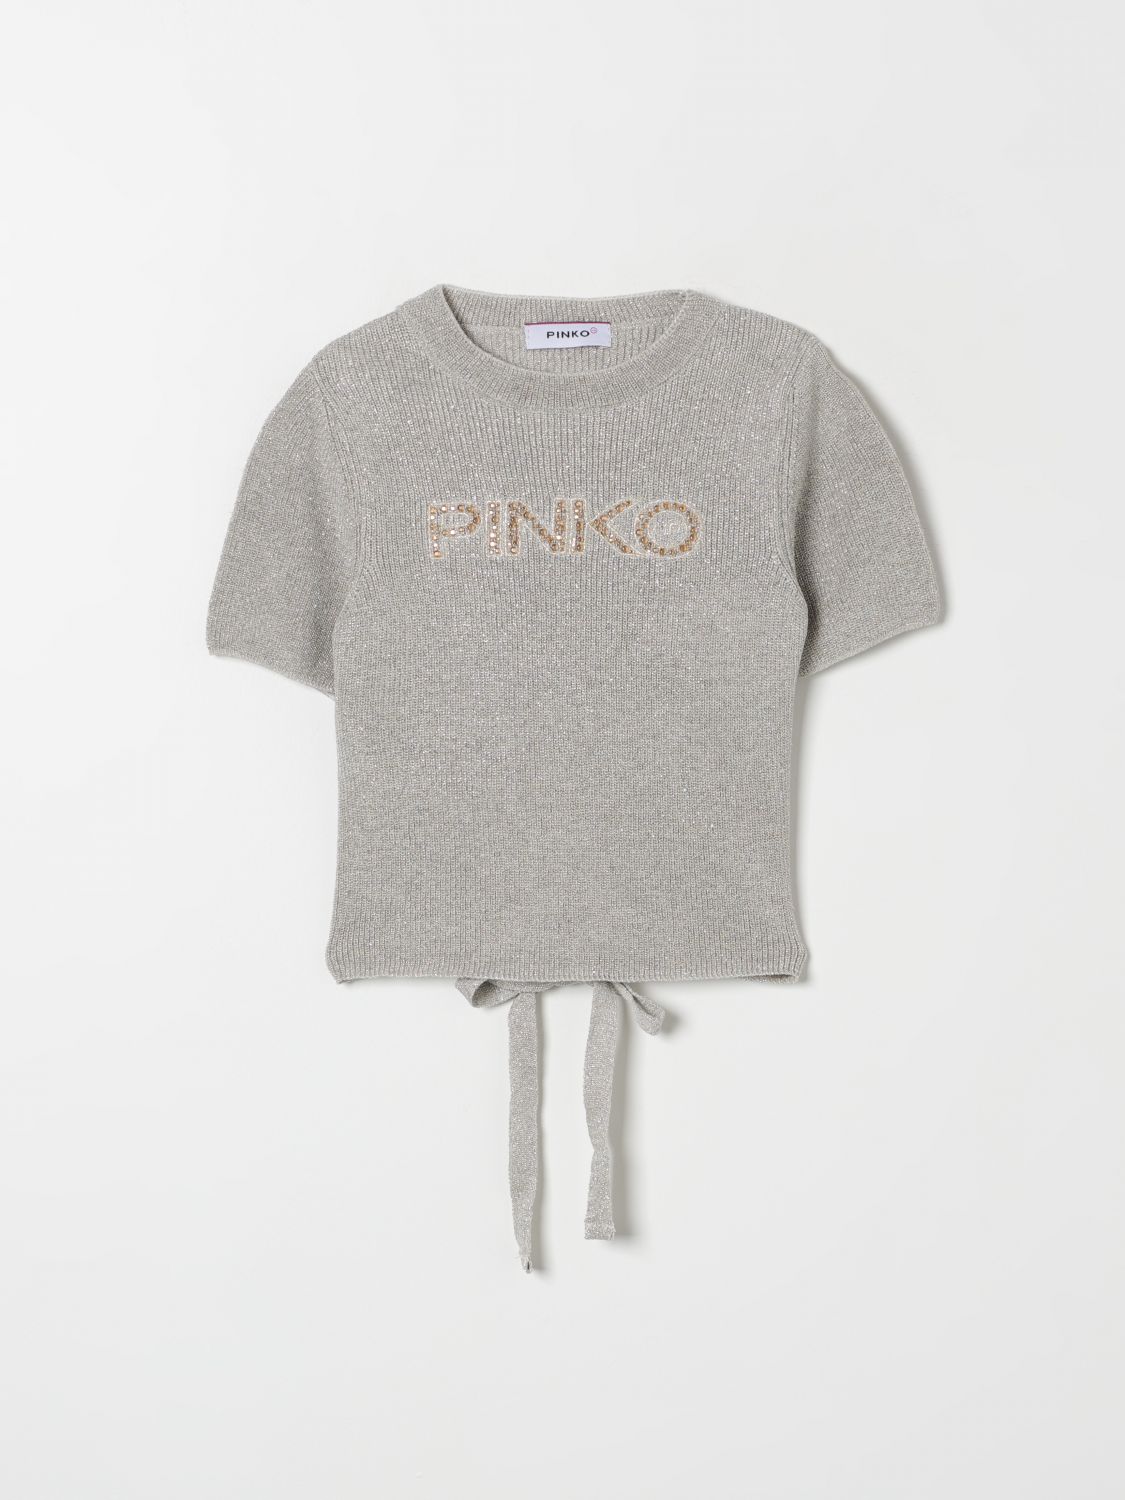 Pinko T-shirt  Kids Kids Color Brown